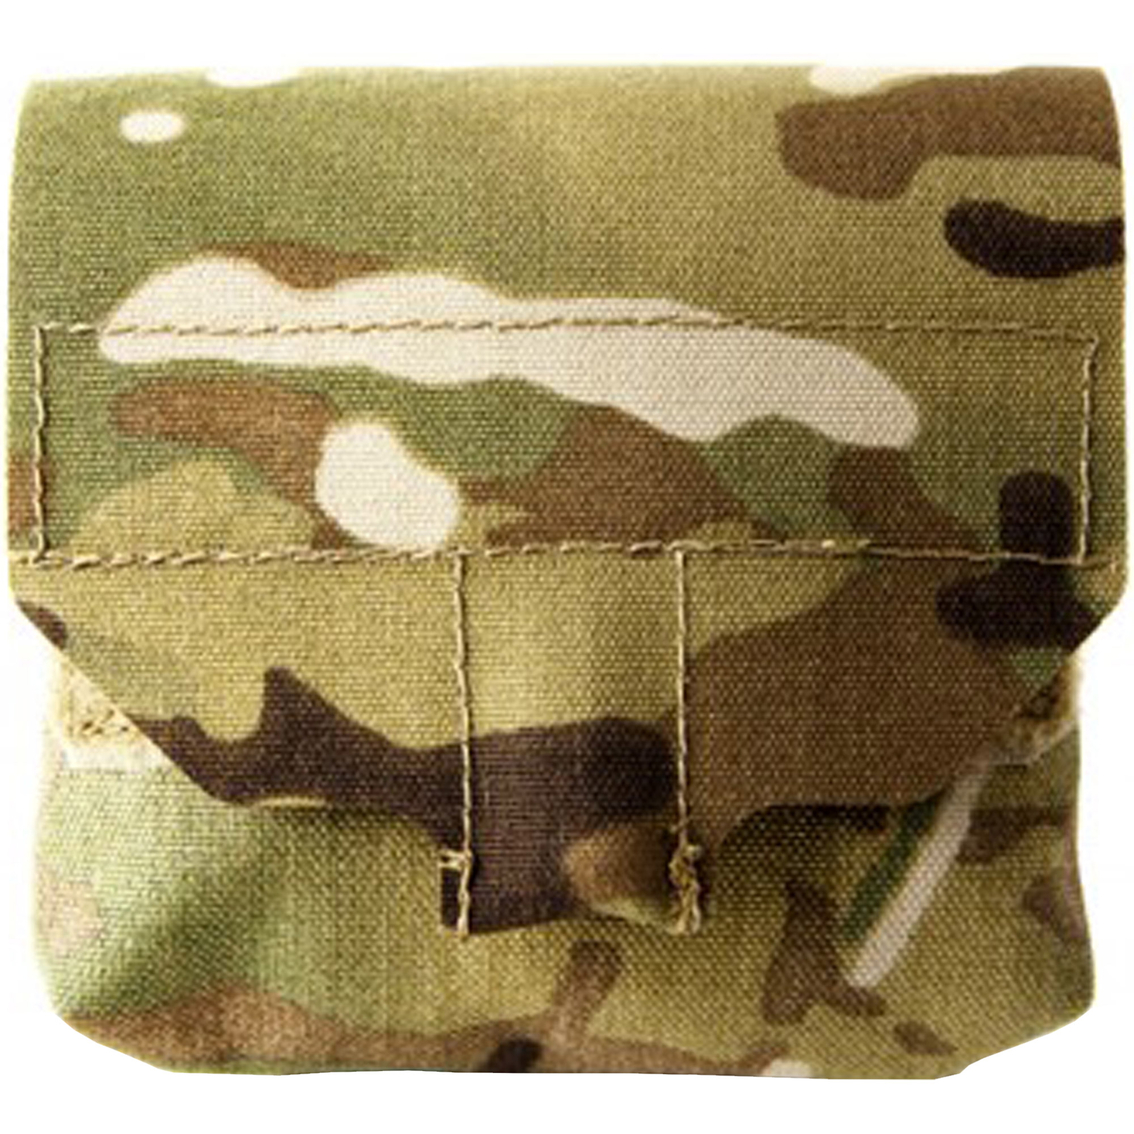 Blue Force Gear Boo Boo Kit Pouch Multicam | Range Bags, Packs ...